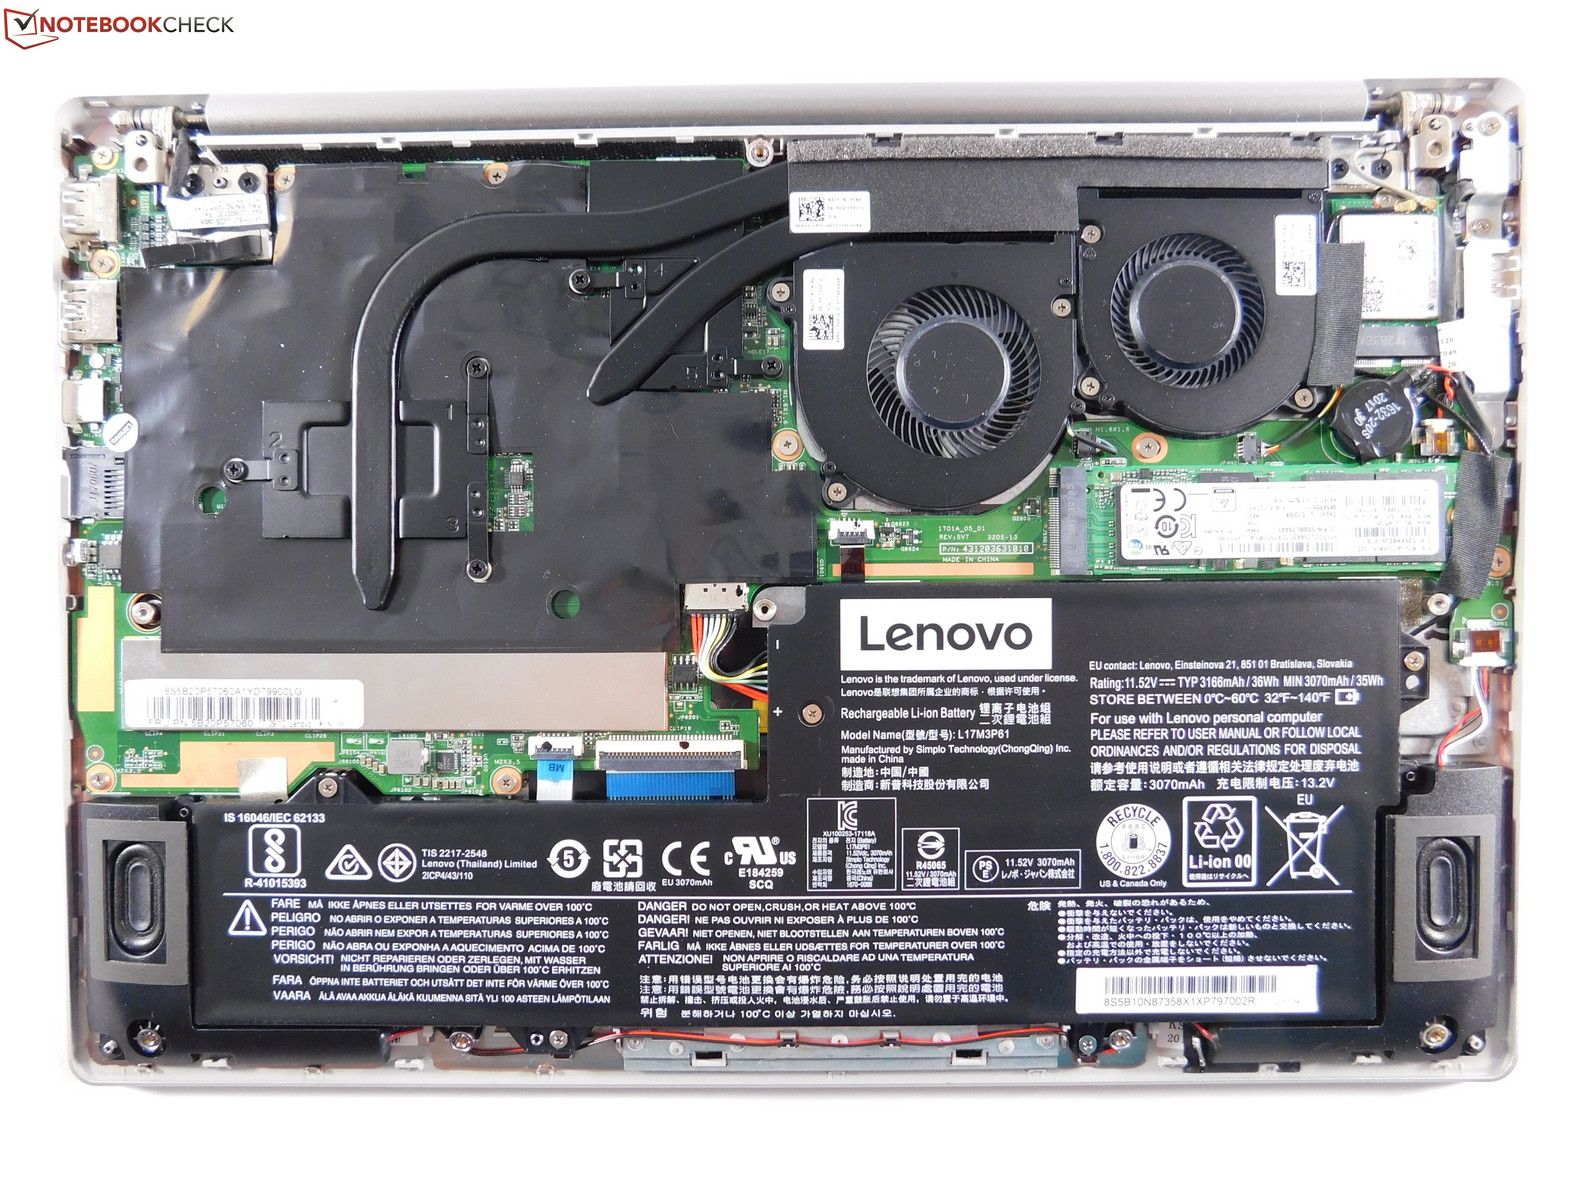 Lenovo IdeaPad 320S-13IKBR (i5-8250U, MX150) Laptop Review